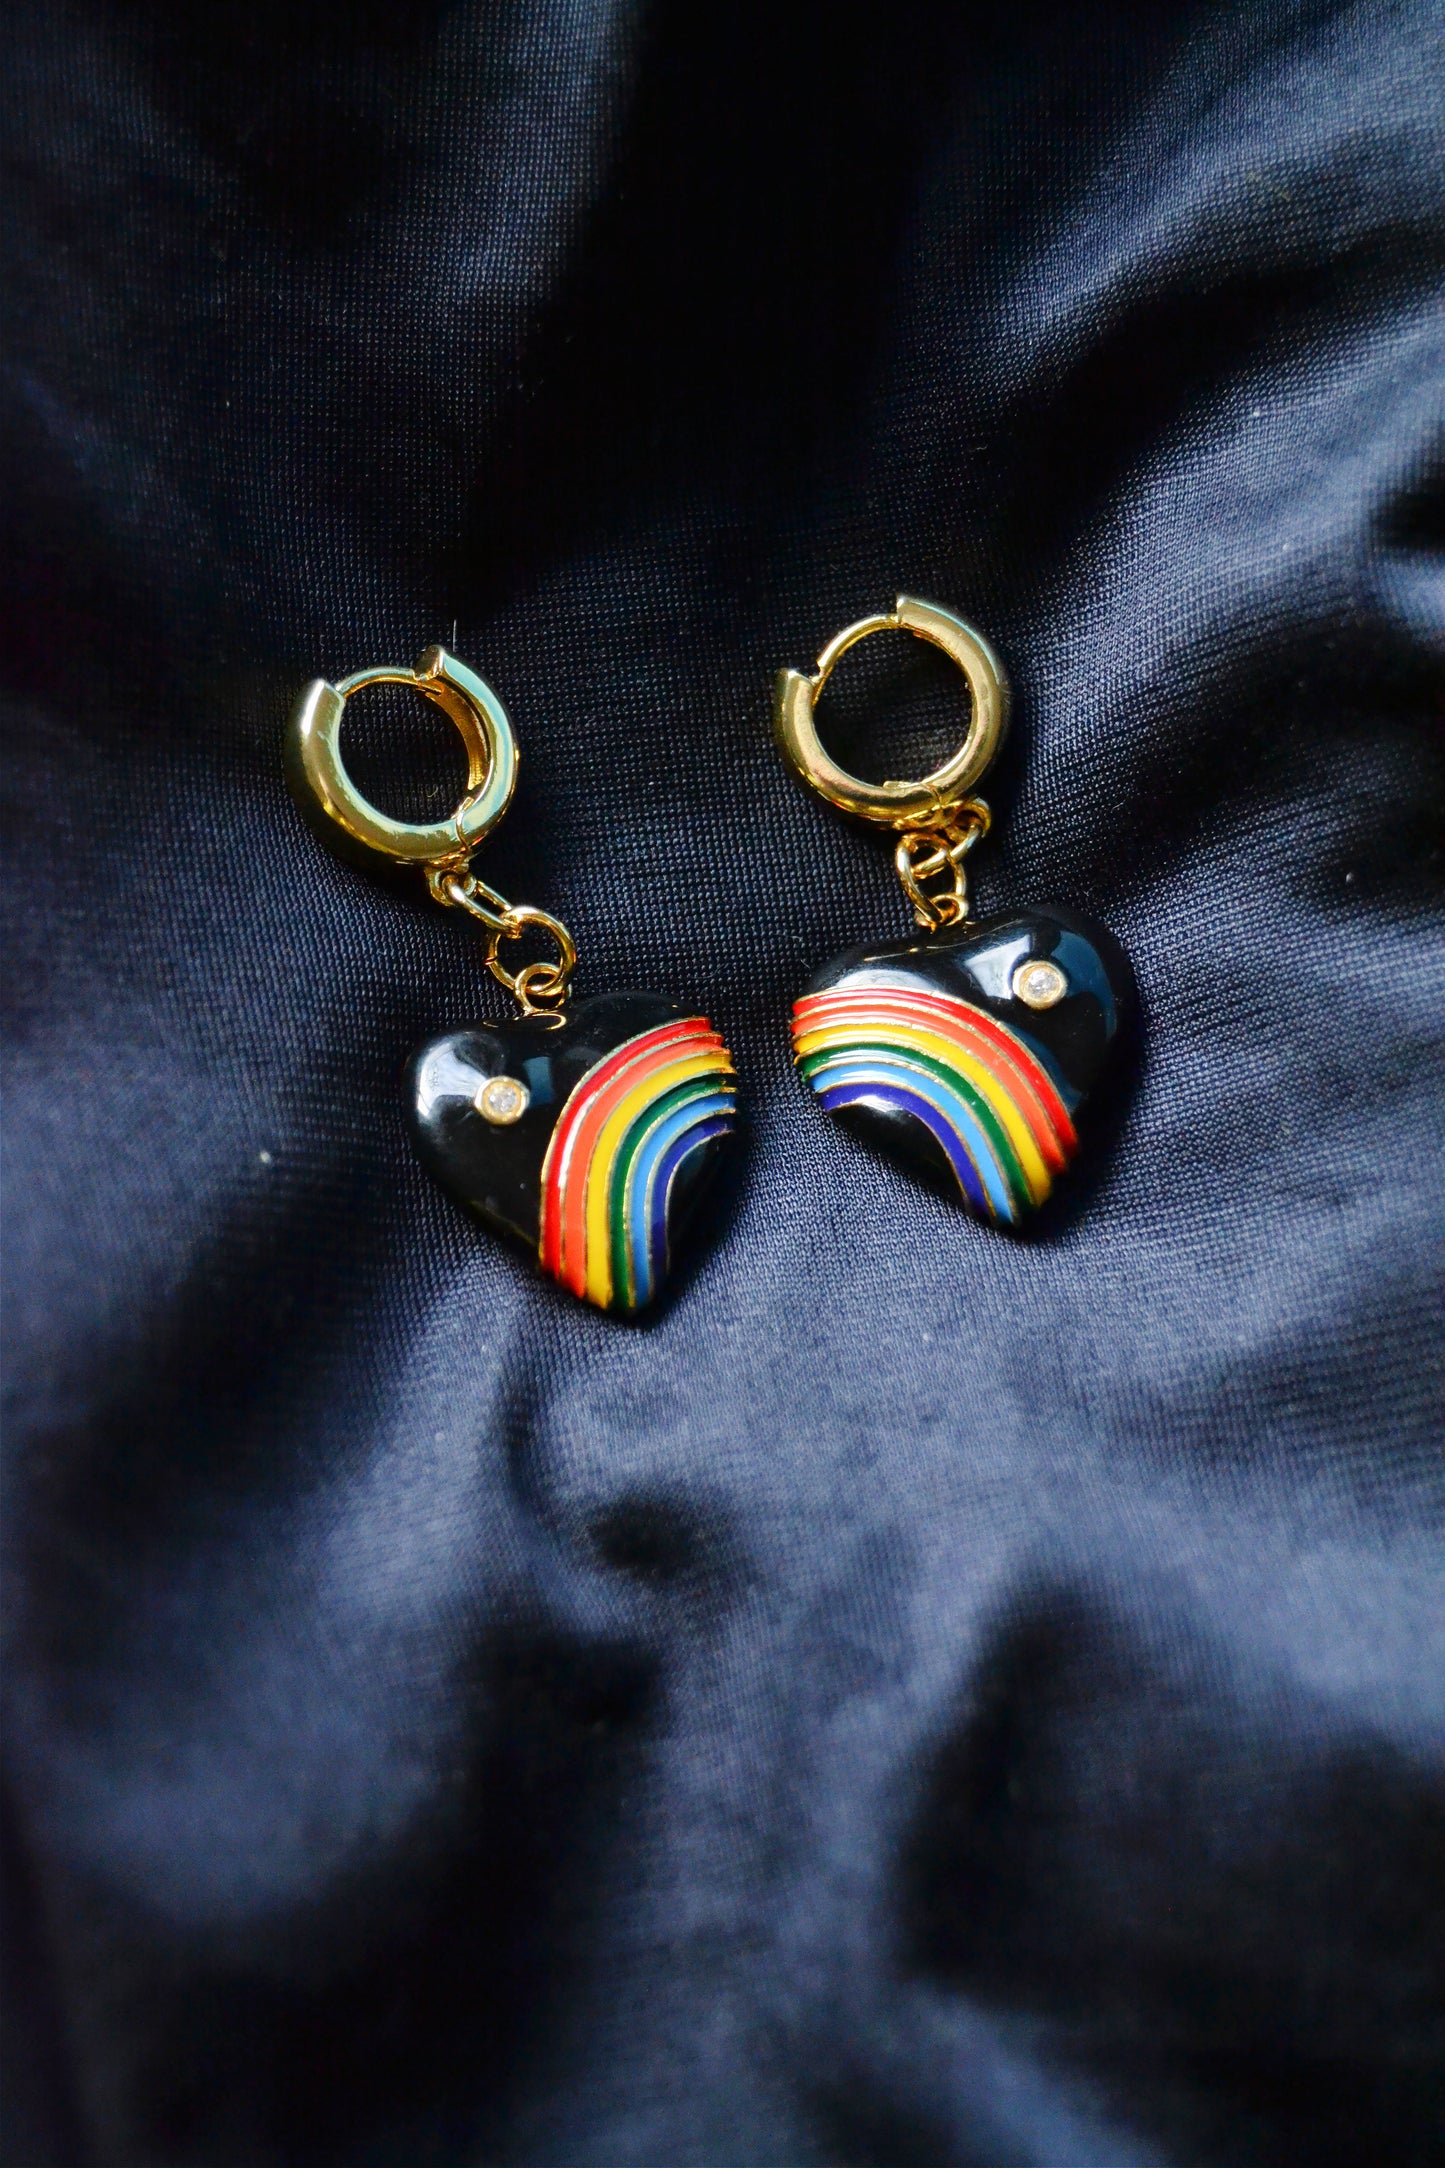 The Rainbow Cutie Earrings